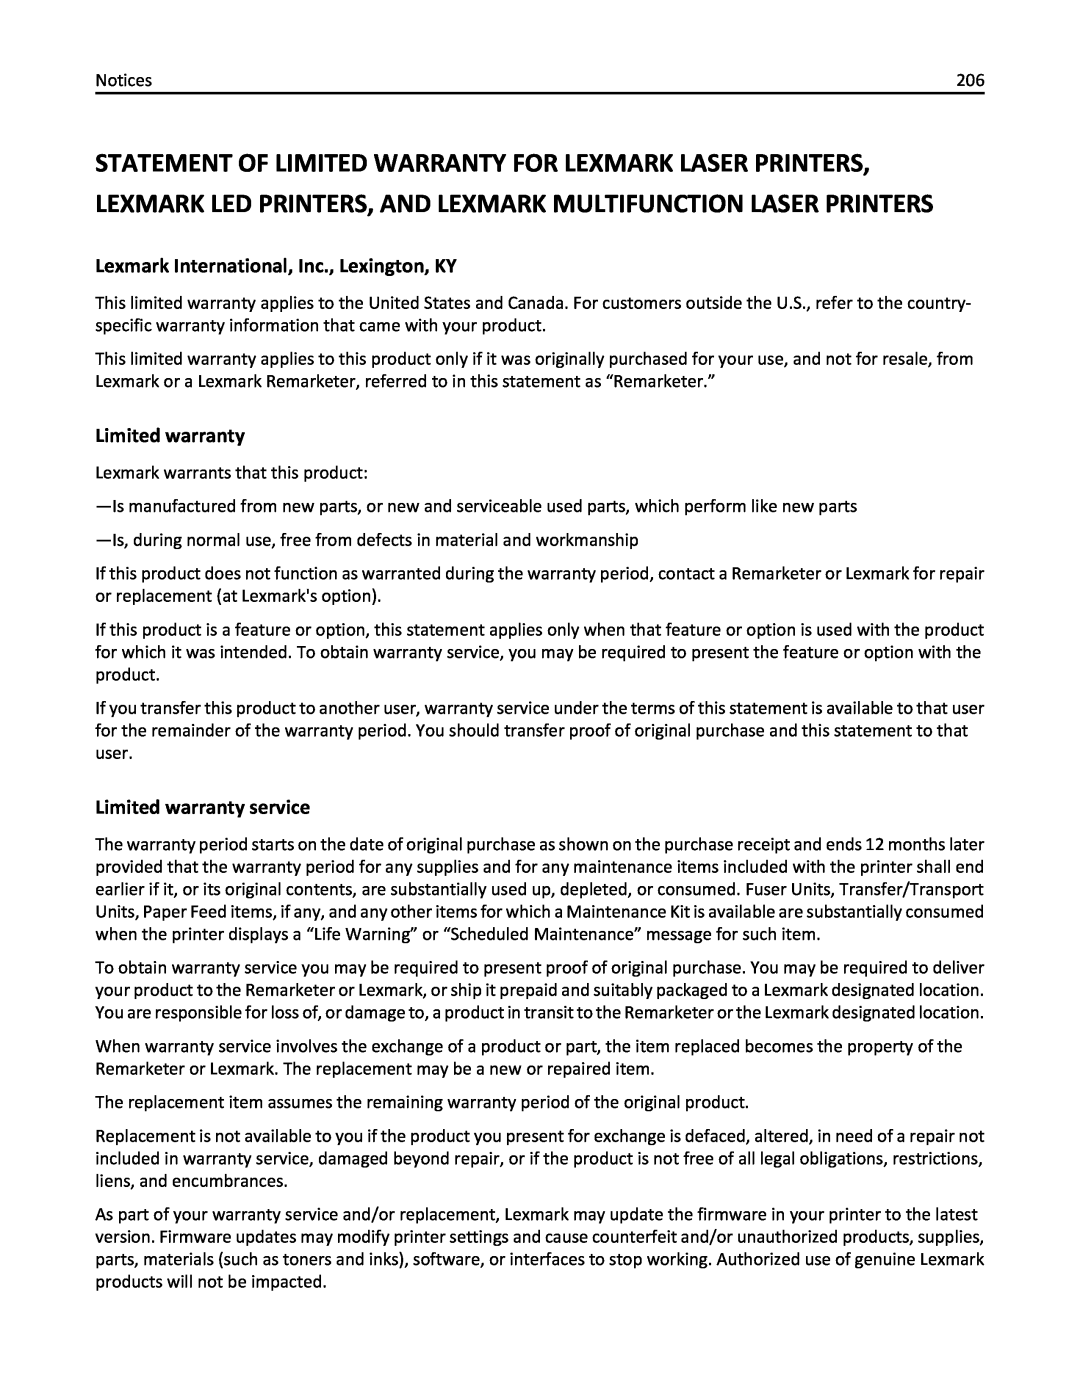 Lexmark 19Z0301, 110 Statement Of Limited Warranty For Lexmark Laser Printers, Lexmark International, Inc., Lexington, KY 